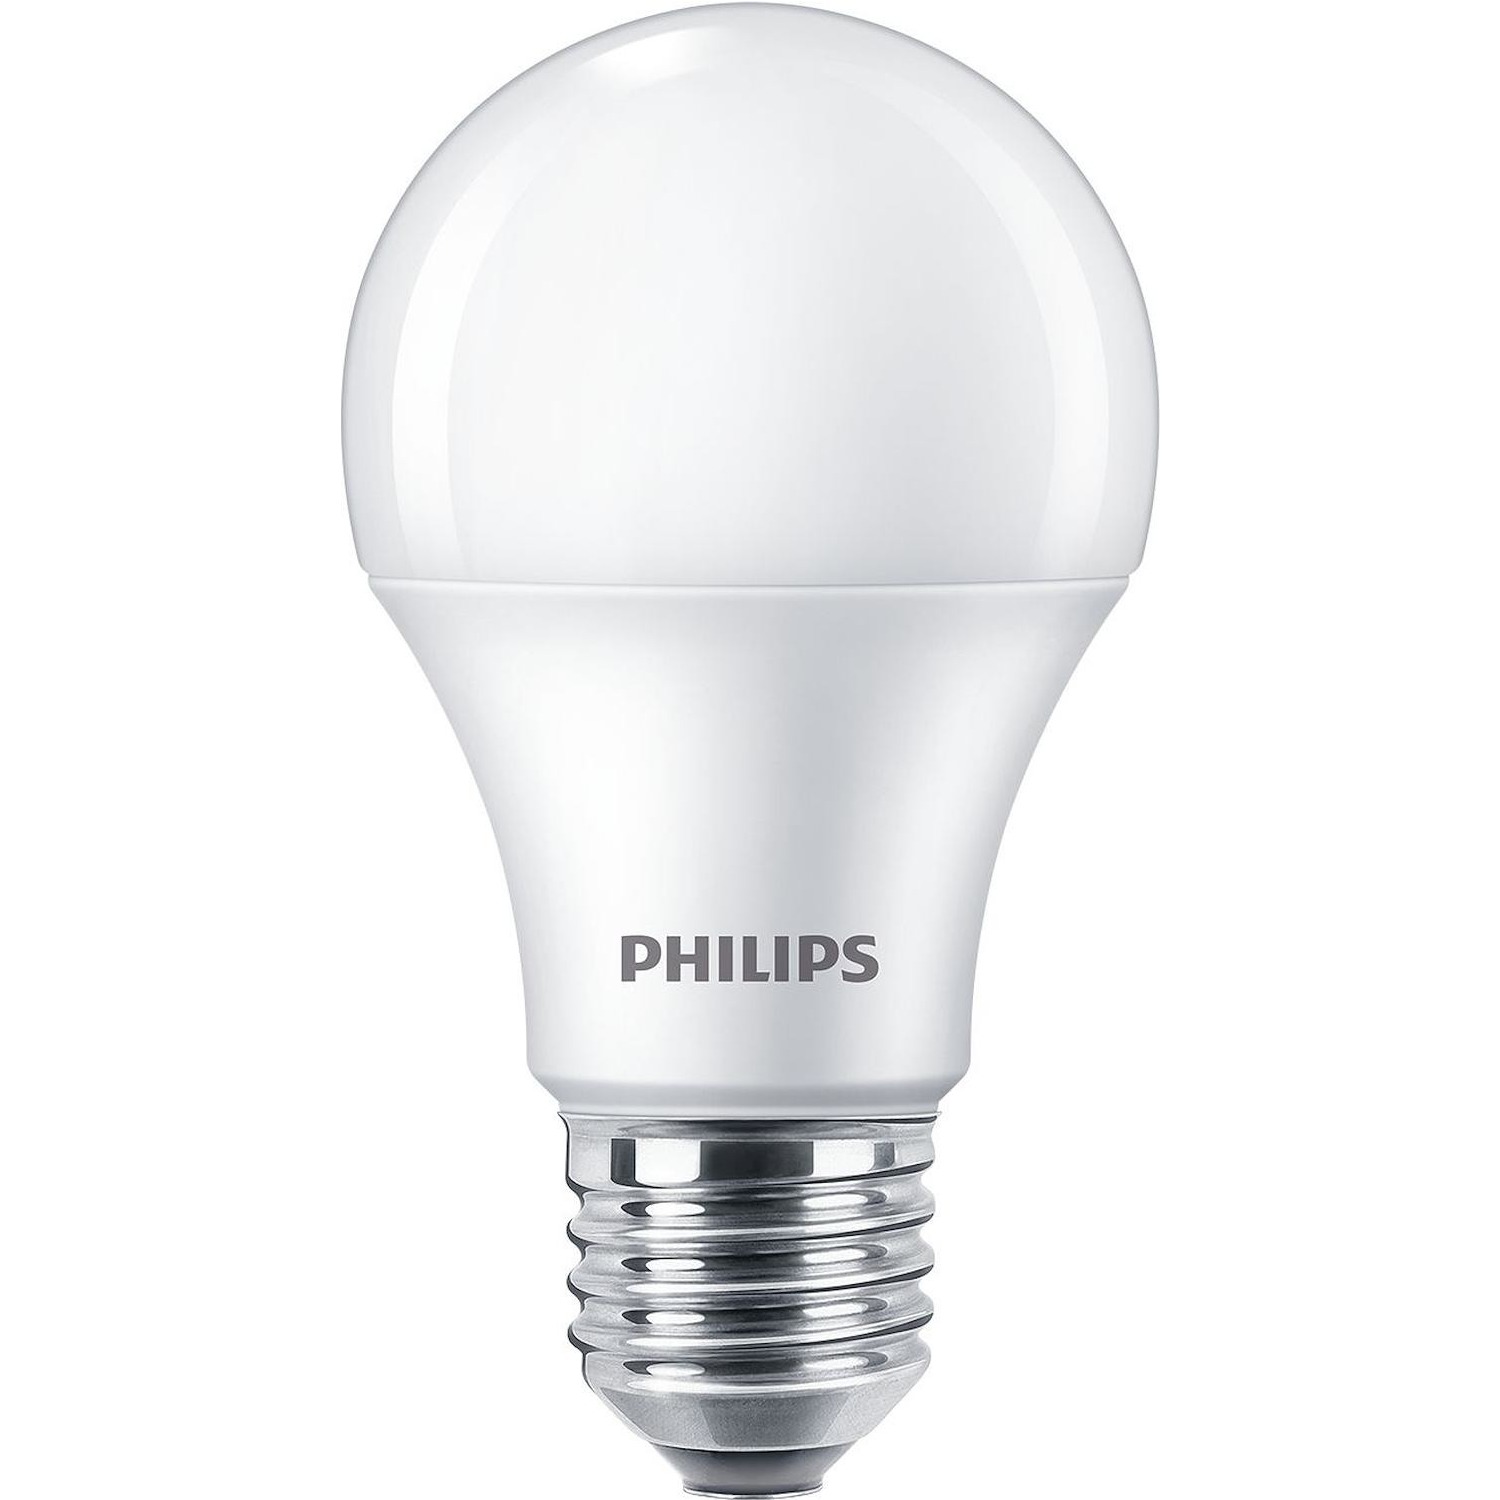 Immagine per Lampadina Philips LED discount goccia 75W E27     4000K 4pz da DIMOStore